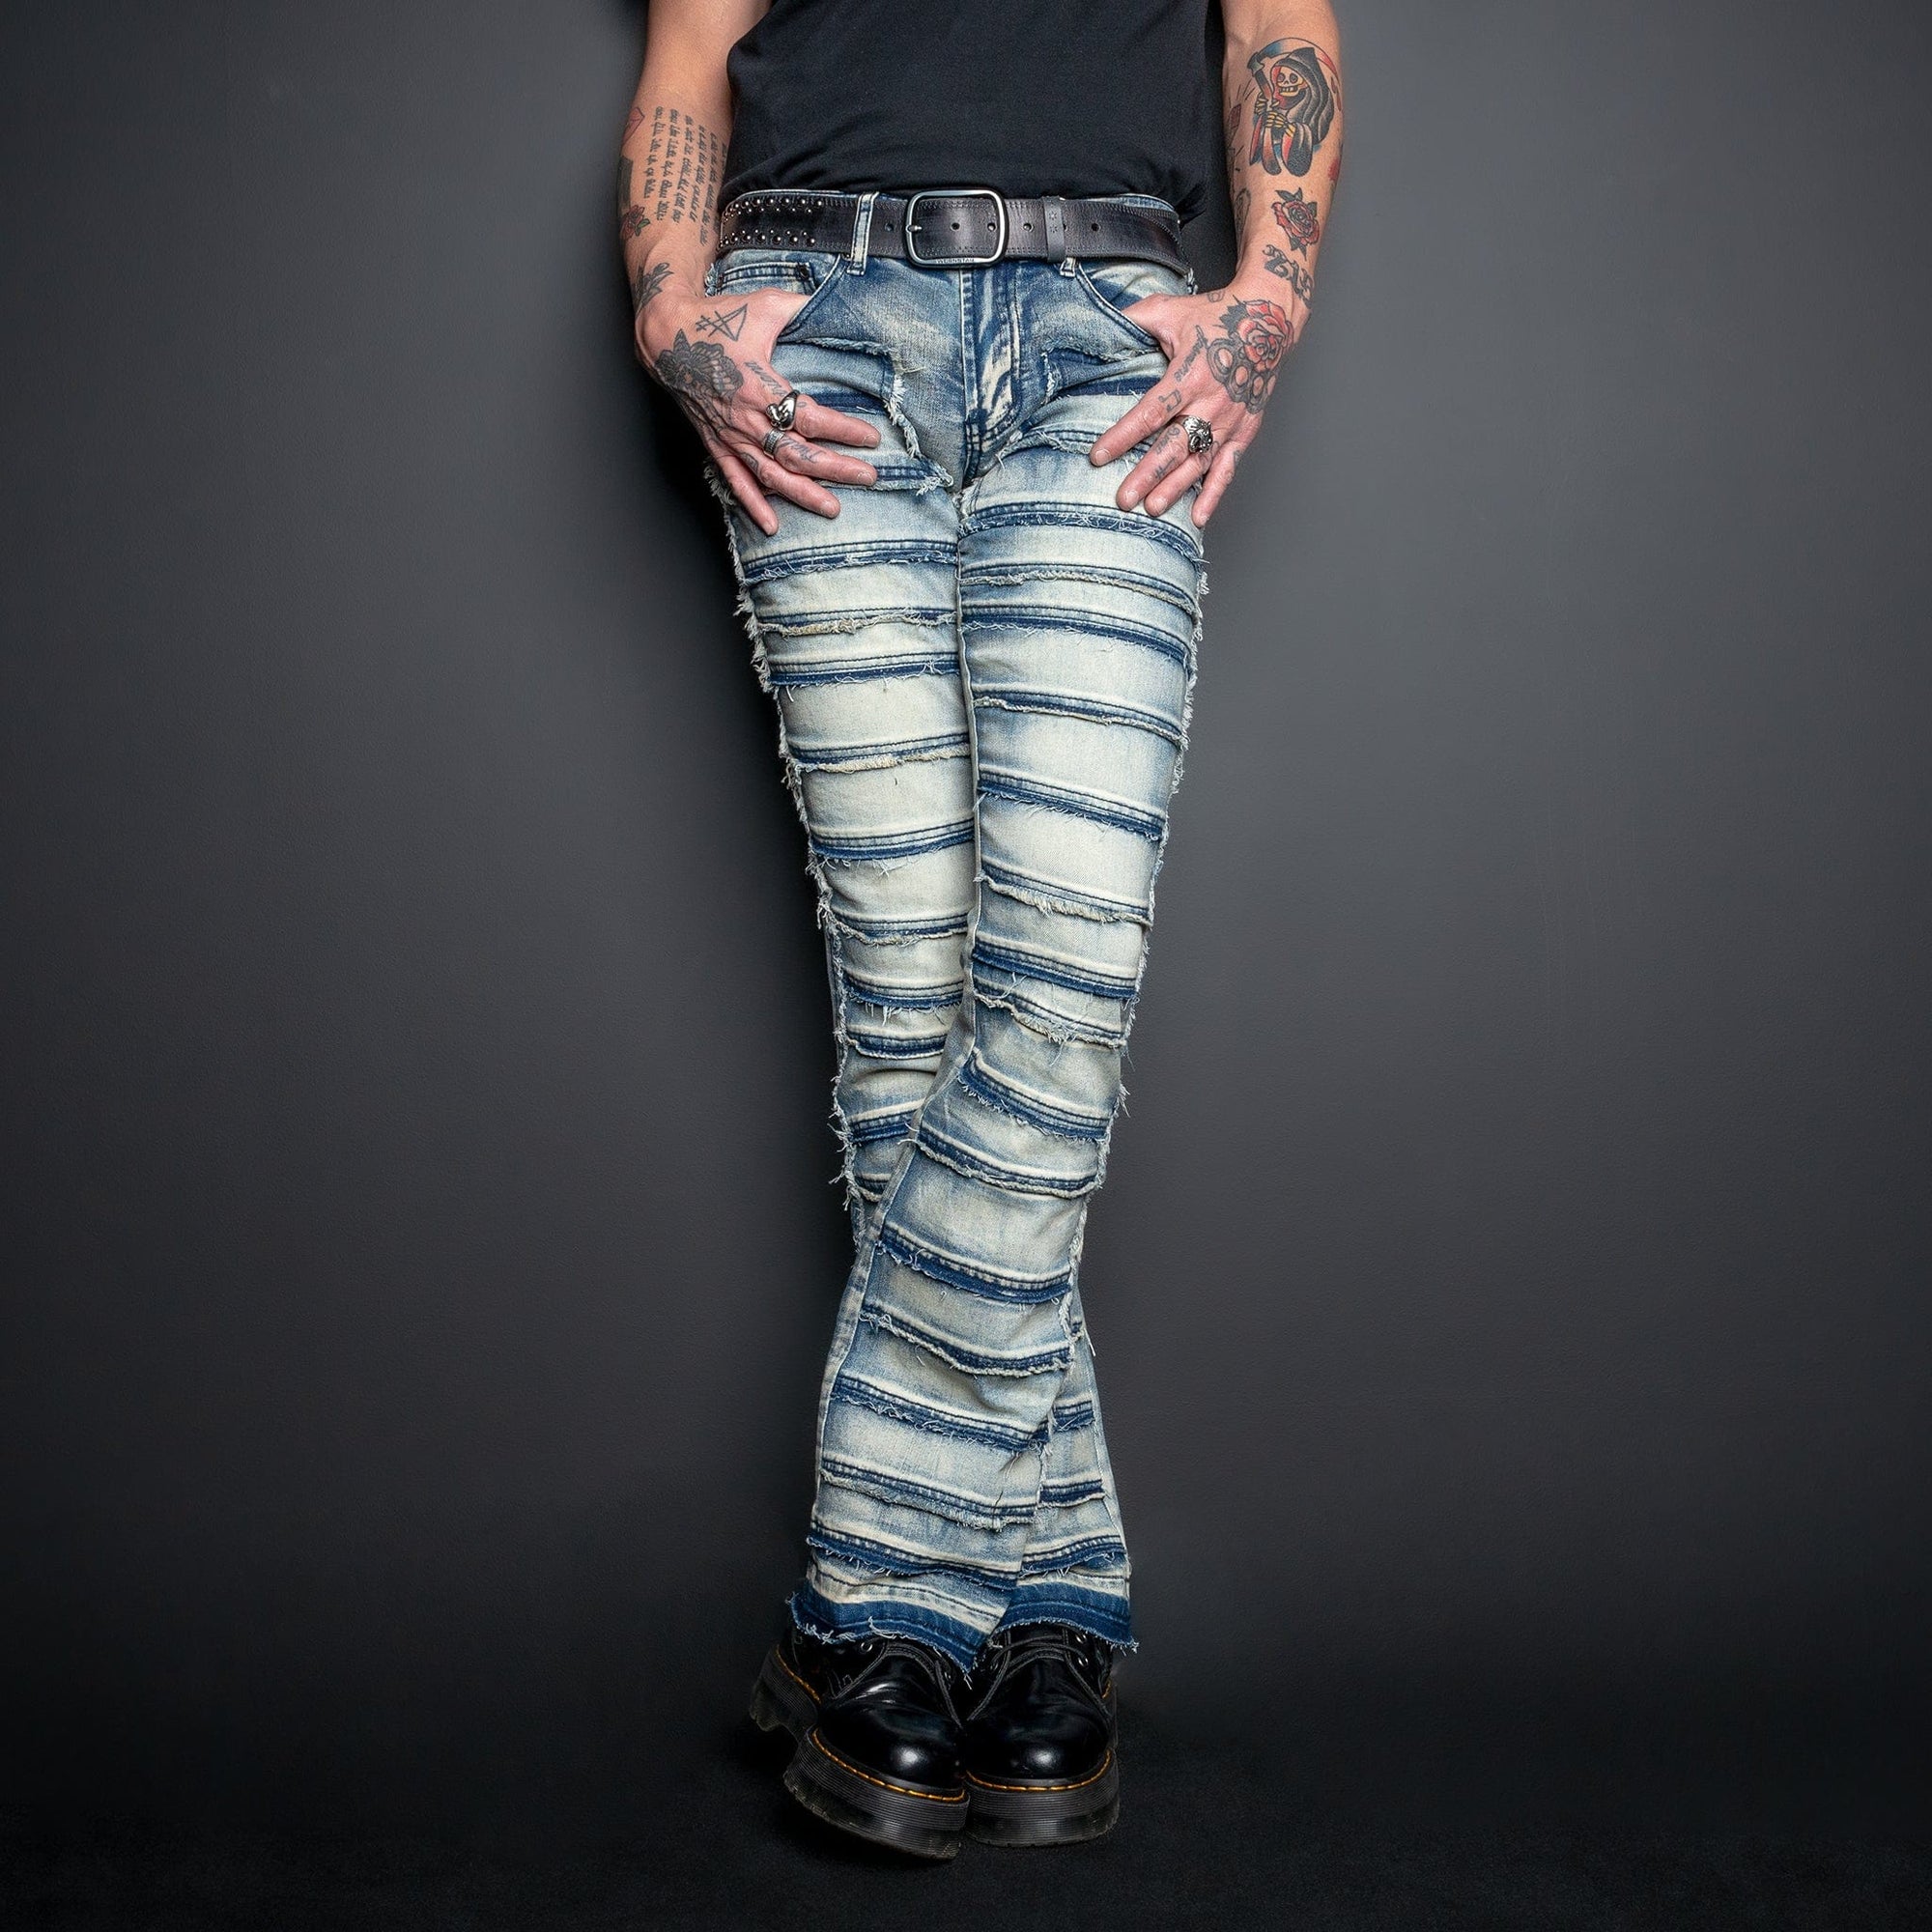 Wornstar Clothing Mens Jeans. Bandage Denim Stage Pants - Classic Blue